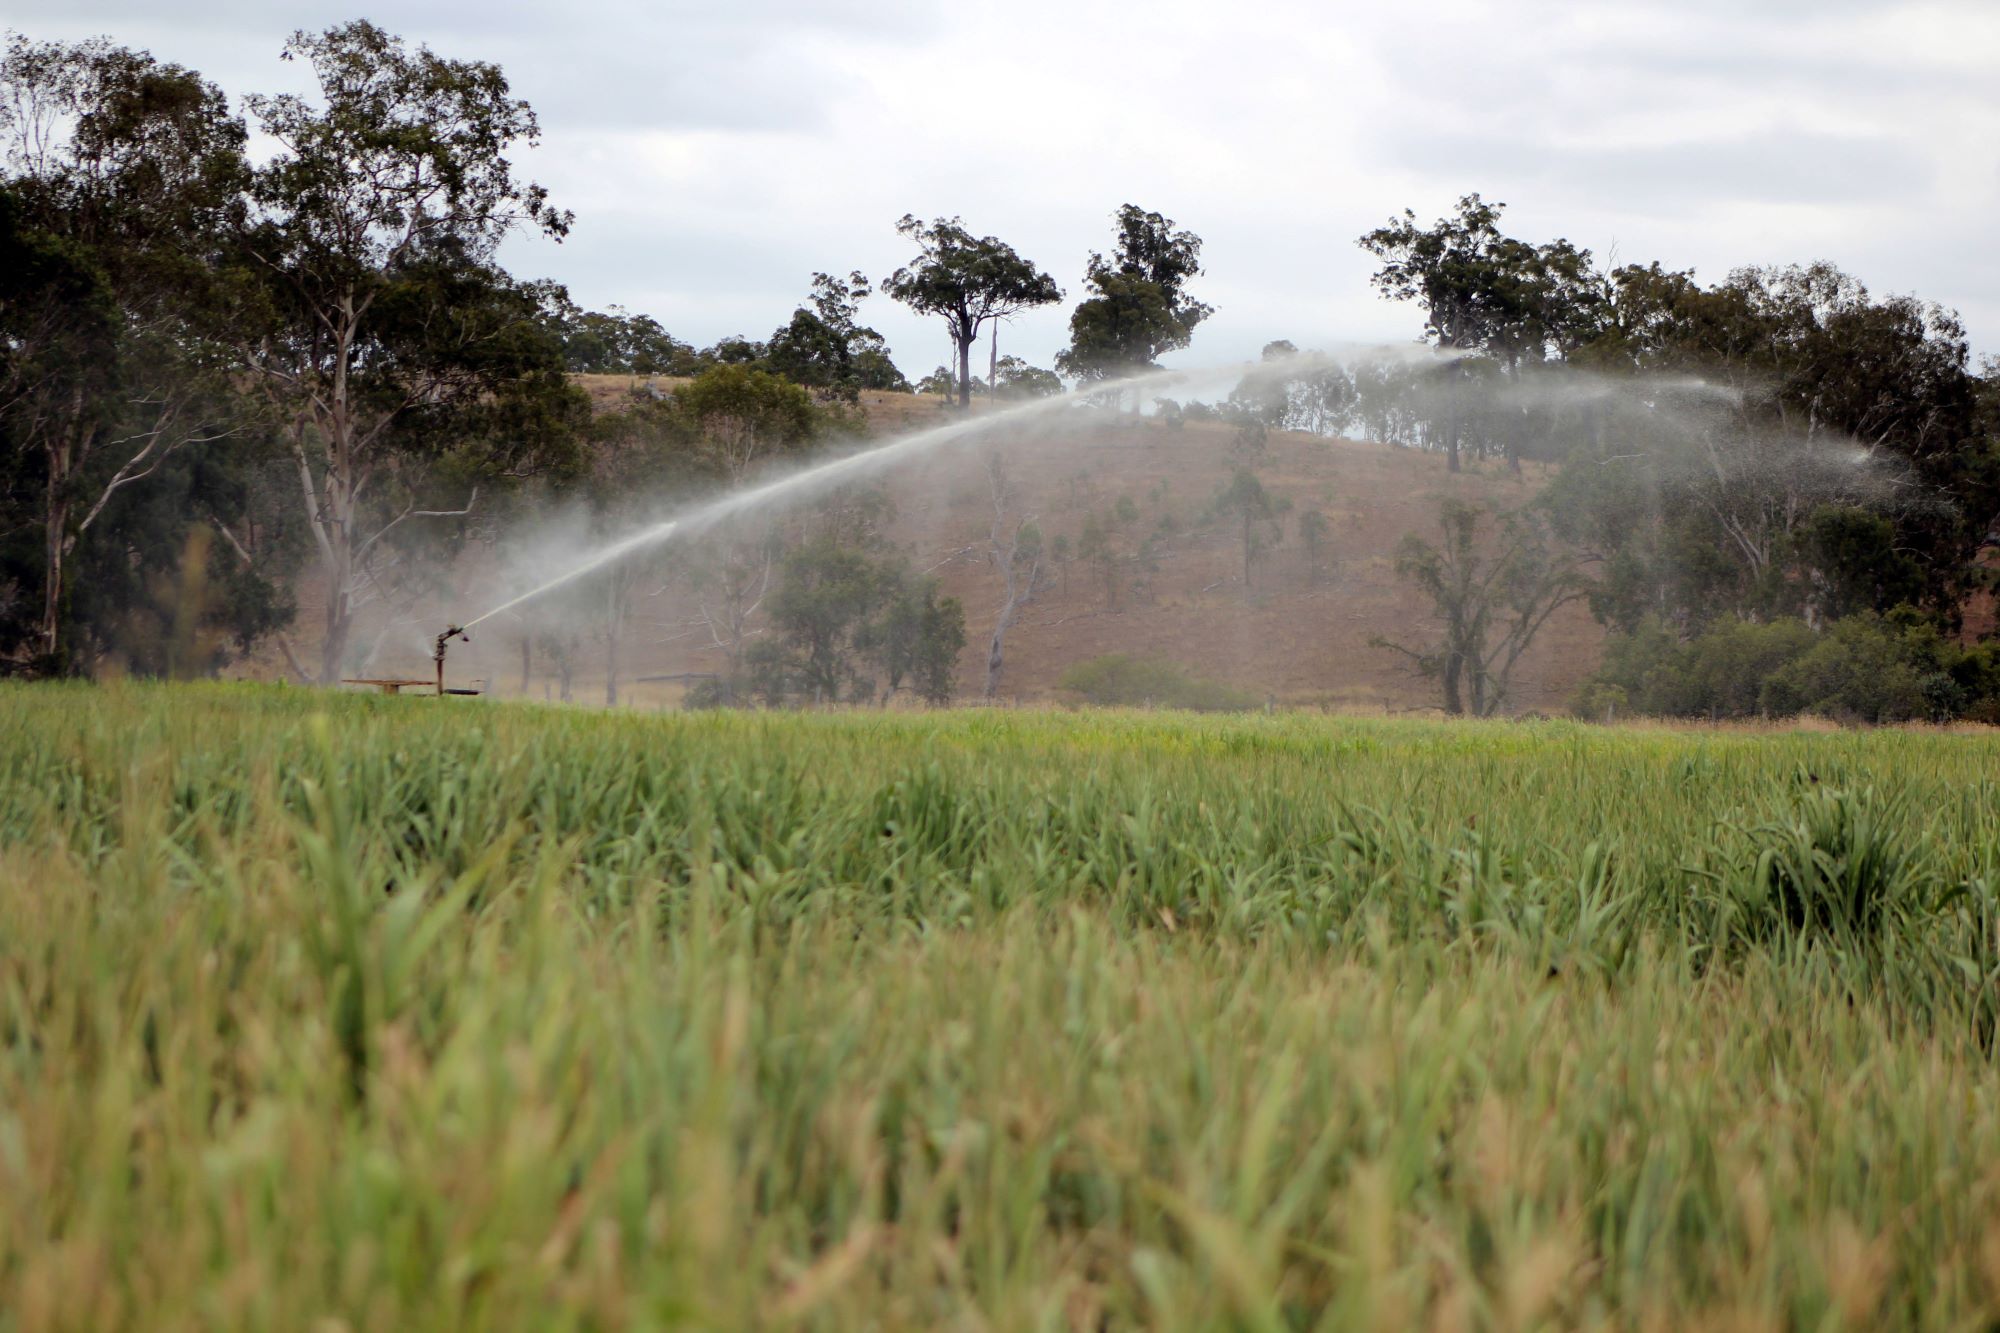 Irrigation over a crop field